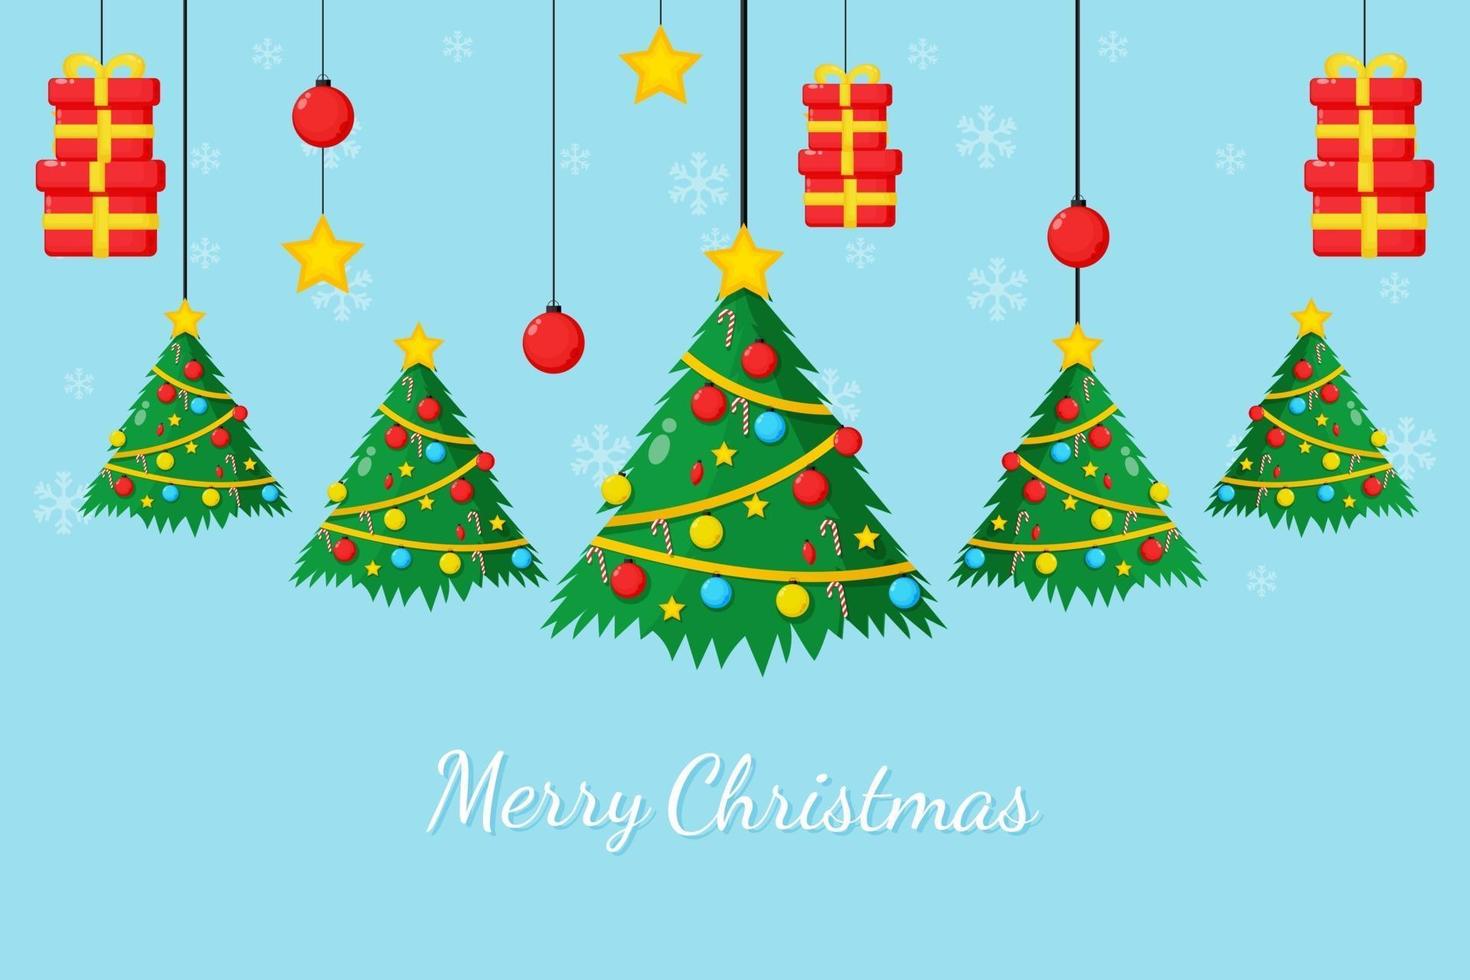 Merry Christmas card with Christmas tree and gift box vector